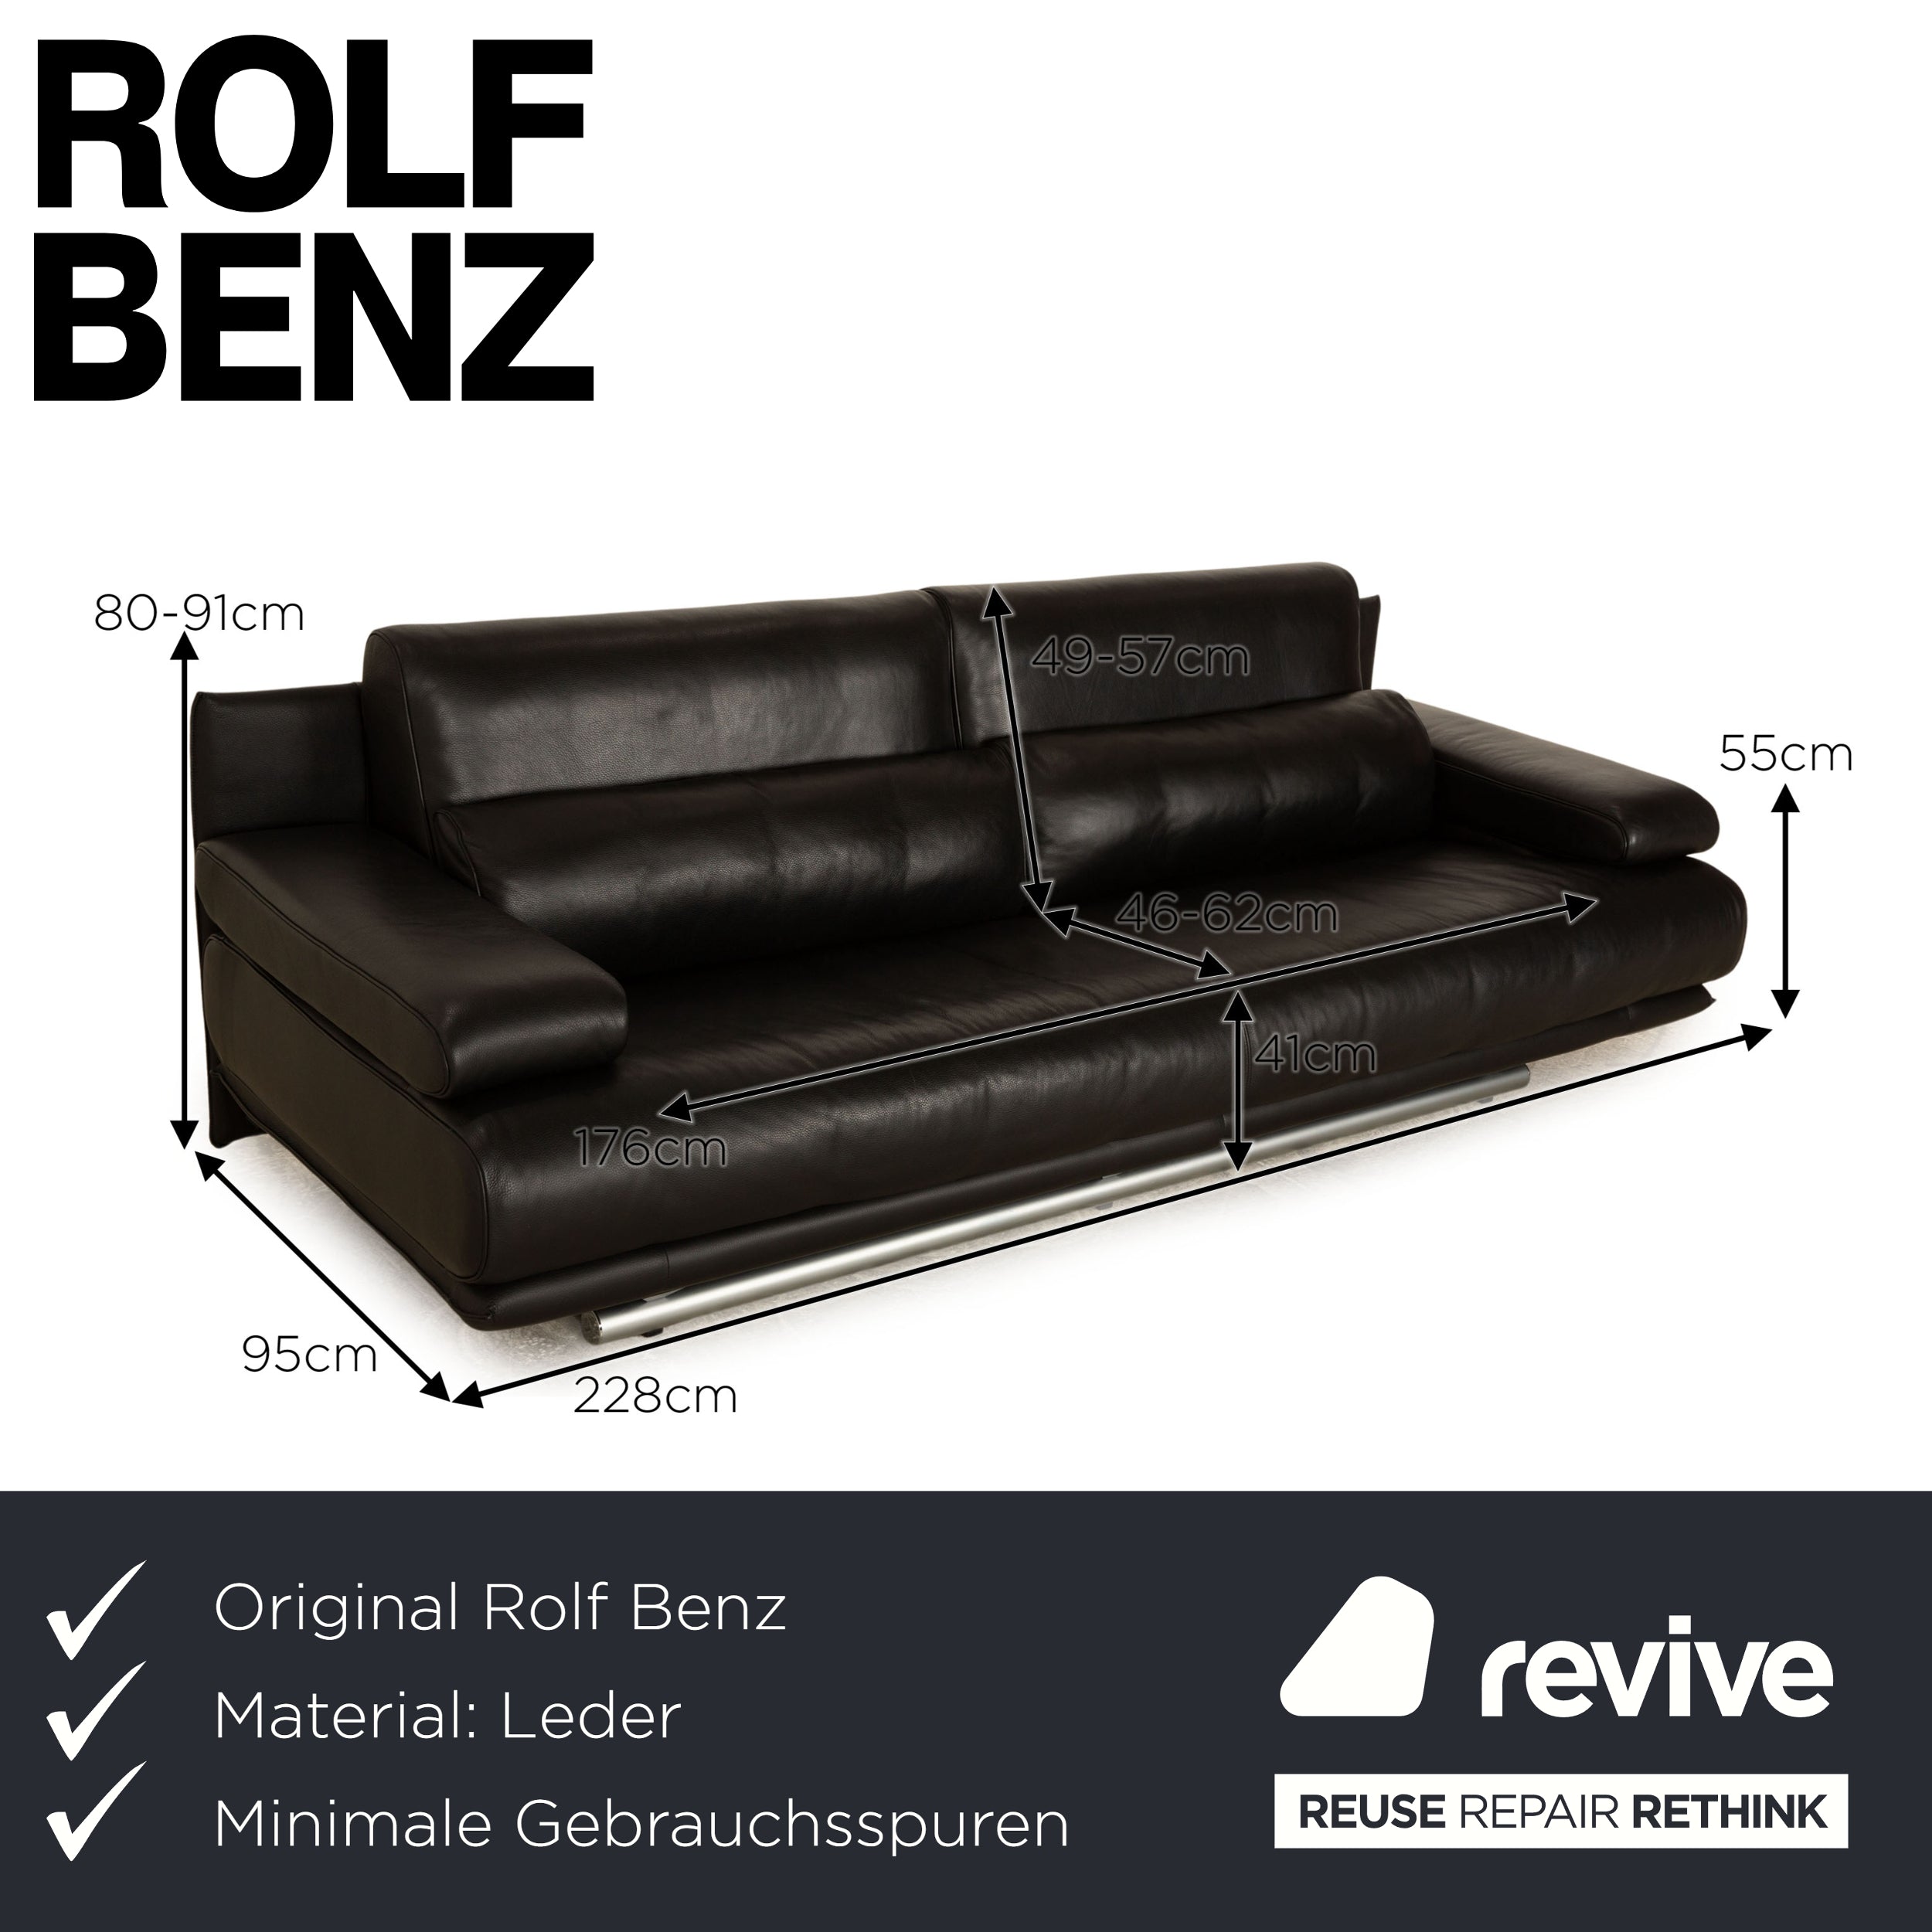 Rolf Benz 6500 Leder Dreisitzer Schwarz Sofa Couch manuelle Funktion